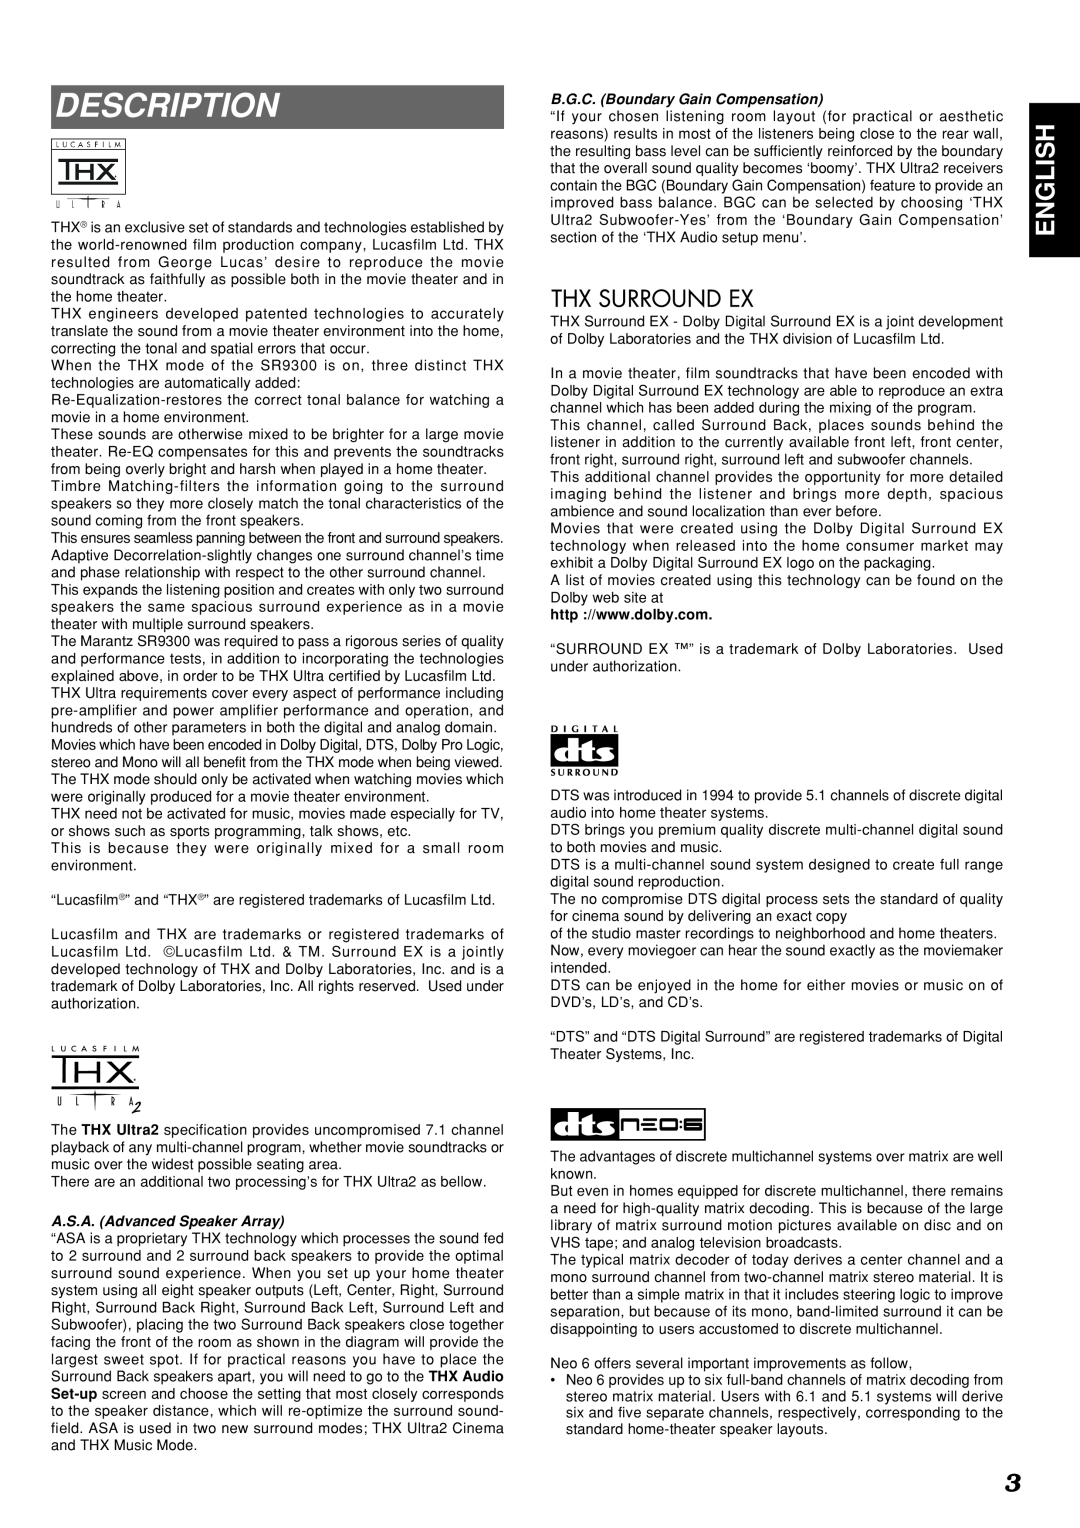 Marantz SR9300 manual Description, English, A.S.A. Advanced Speaker Array, B.G.C. Boundary Gain Compensation 